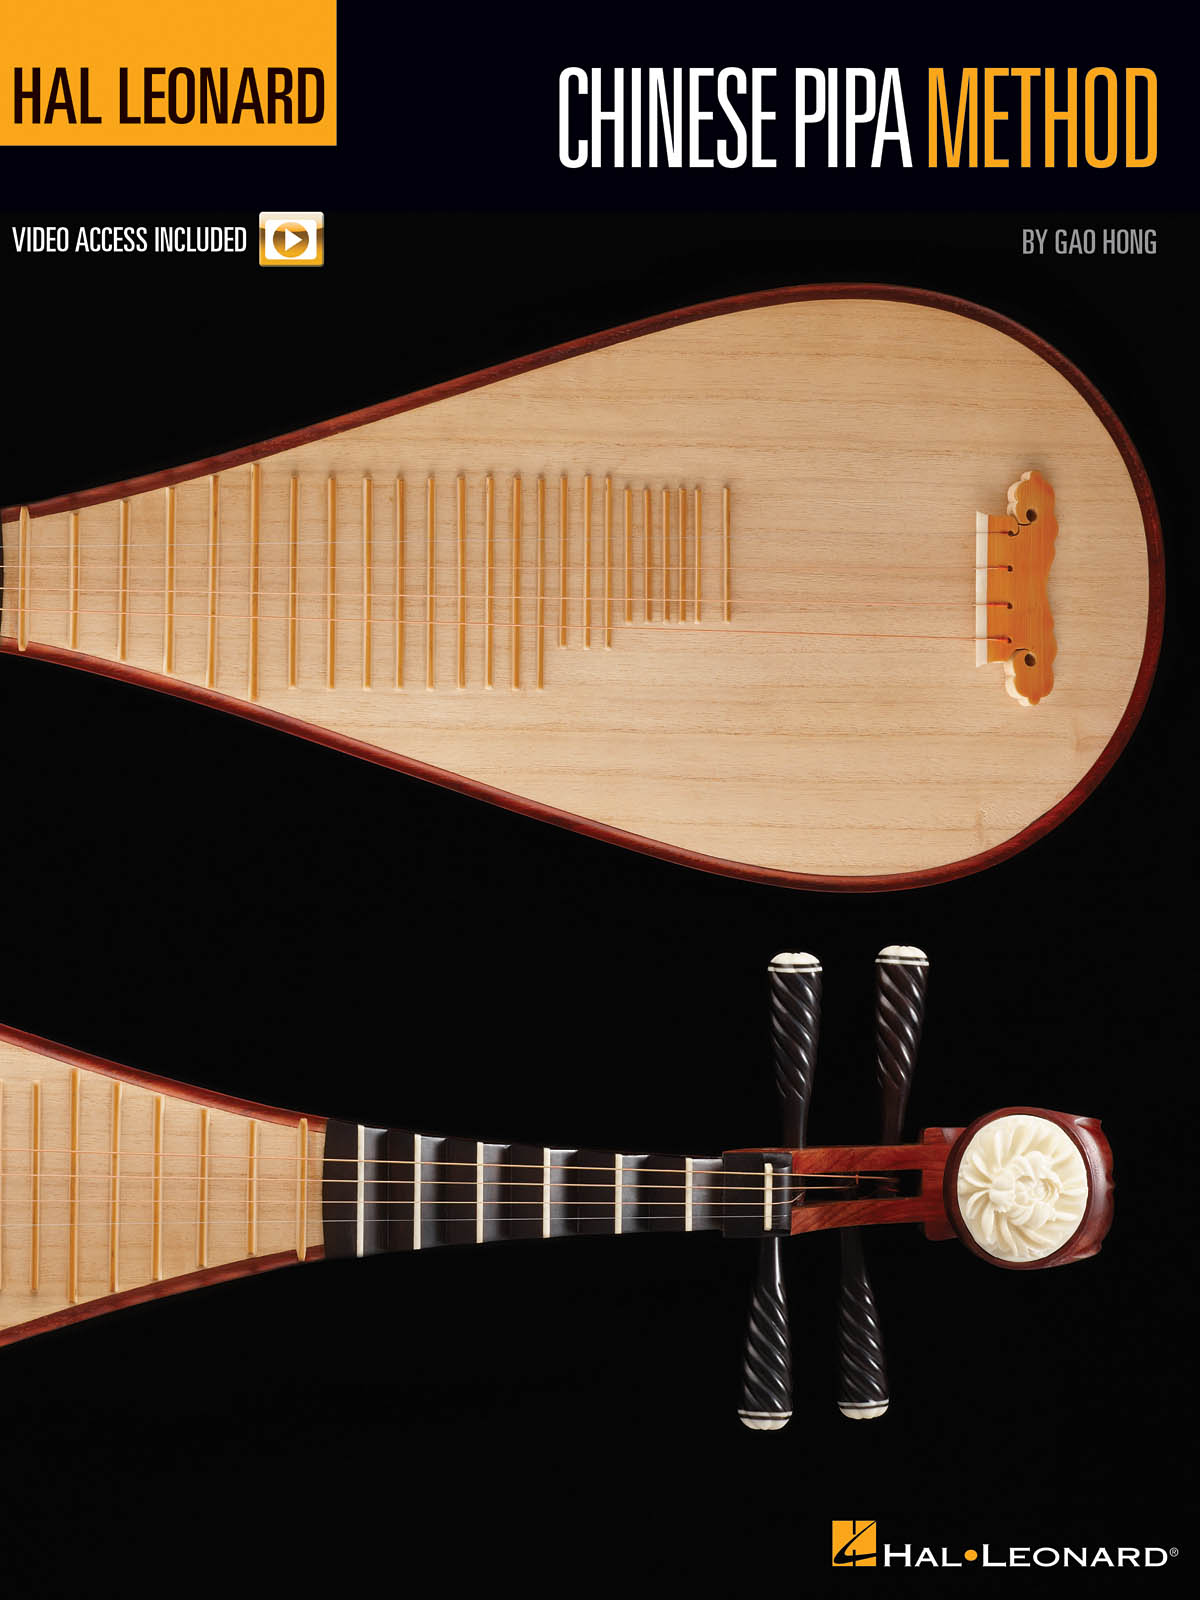 Hal Leonard Chinese Pipa Method: Other plucked strings: Instrumental Album